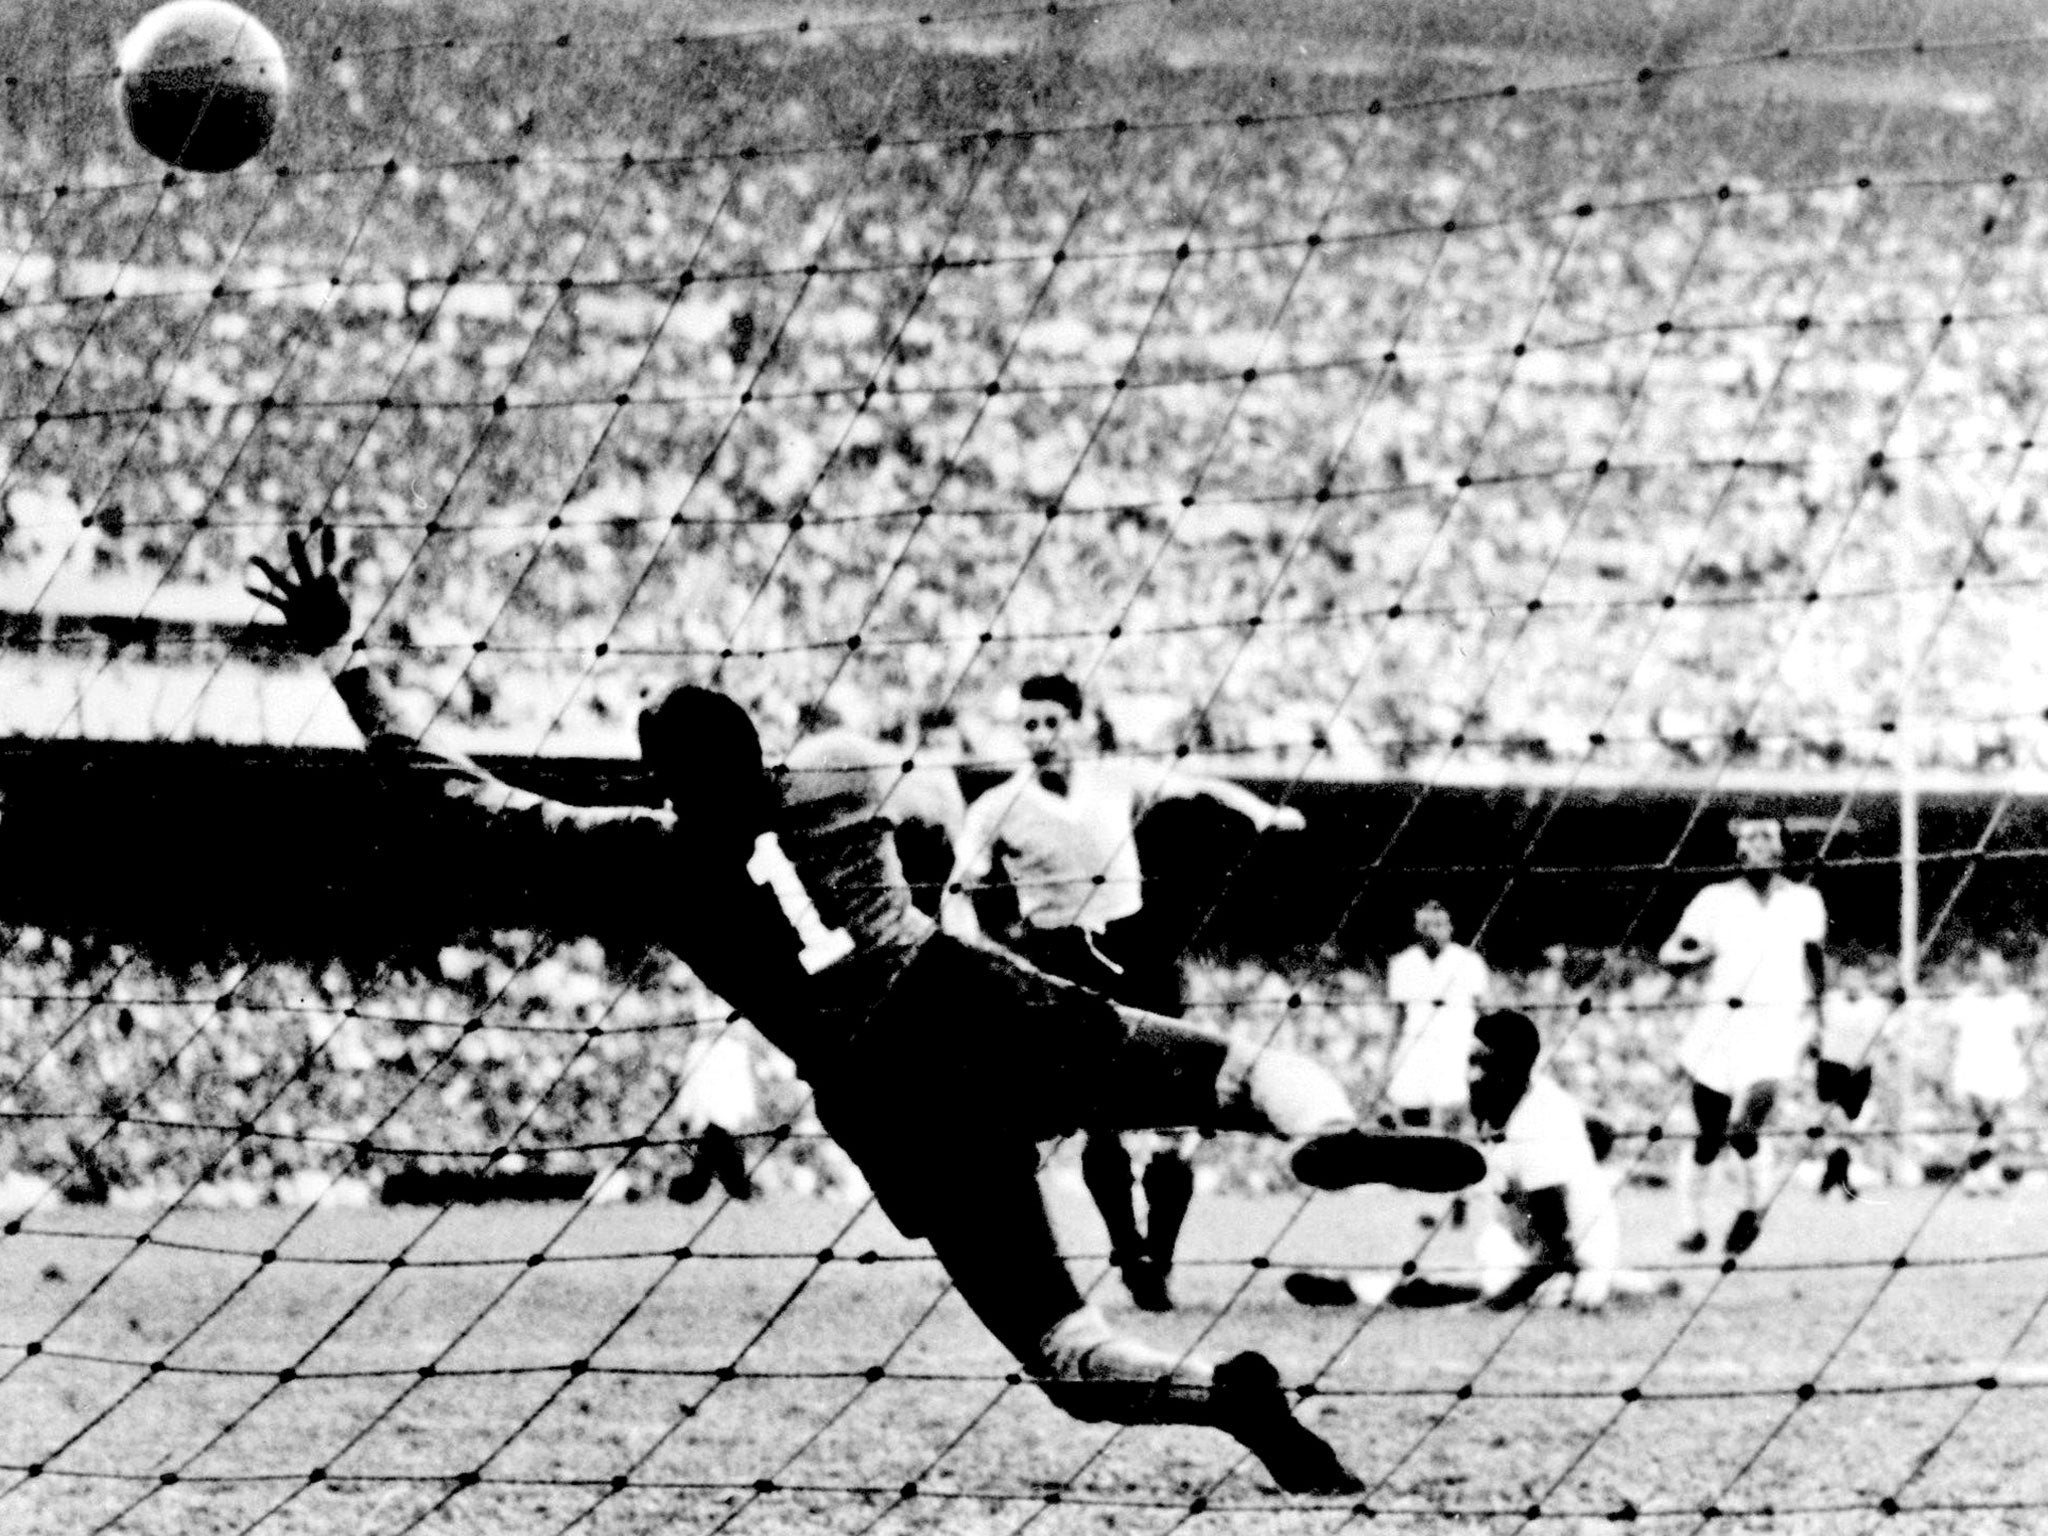 Juan Alberto Schiaffino scores for Uruguay in the win over Brazil in the Maracana in the 1950 World Cup